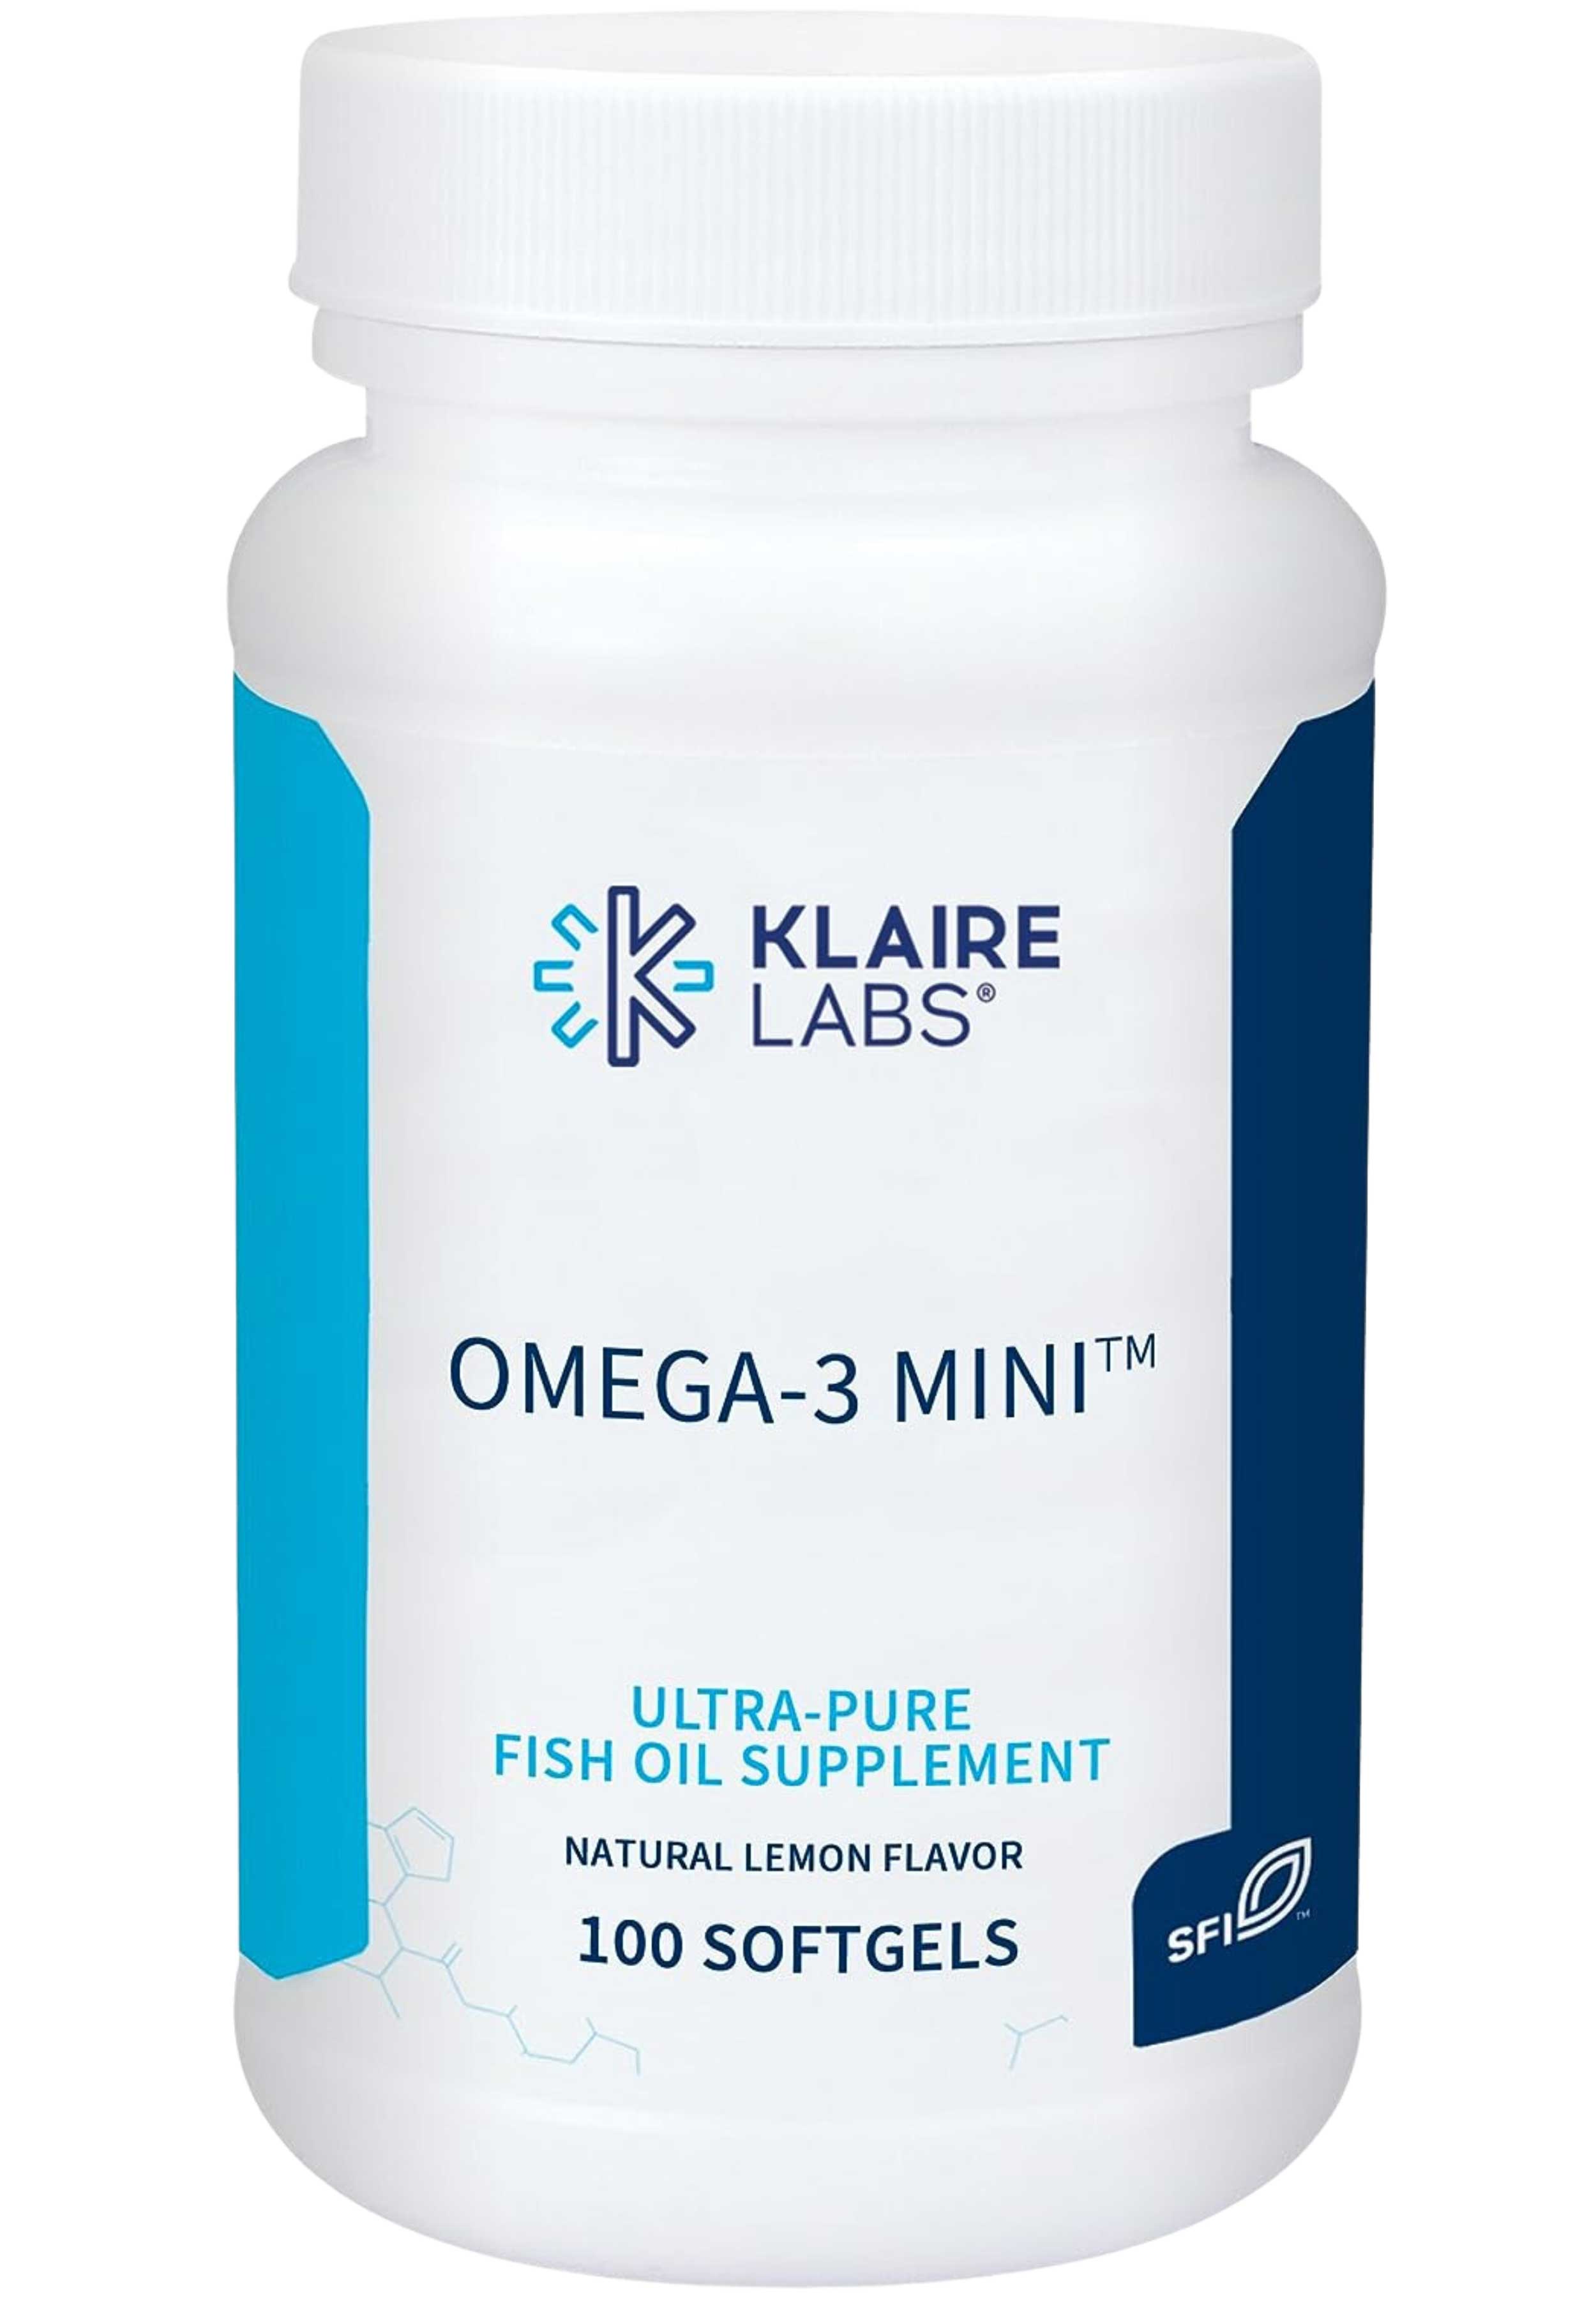 Klaire Labs Omega-3 Mini